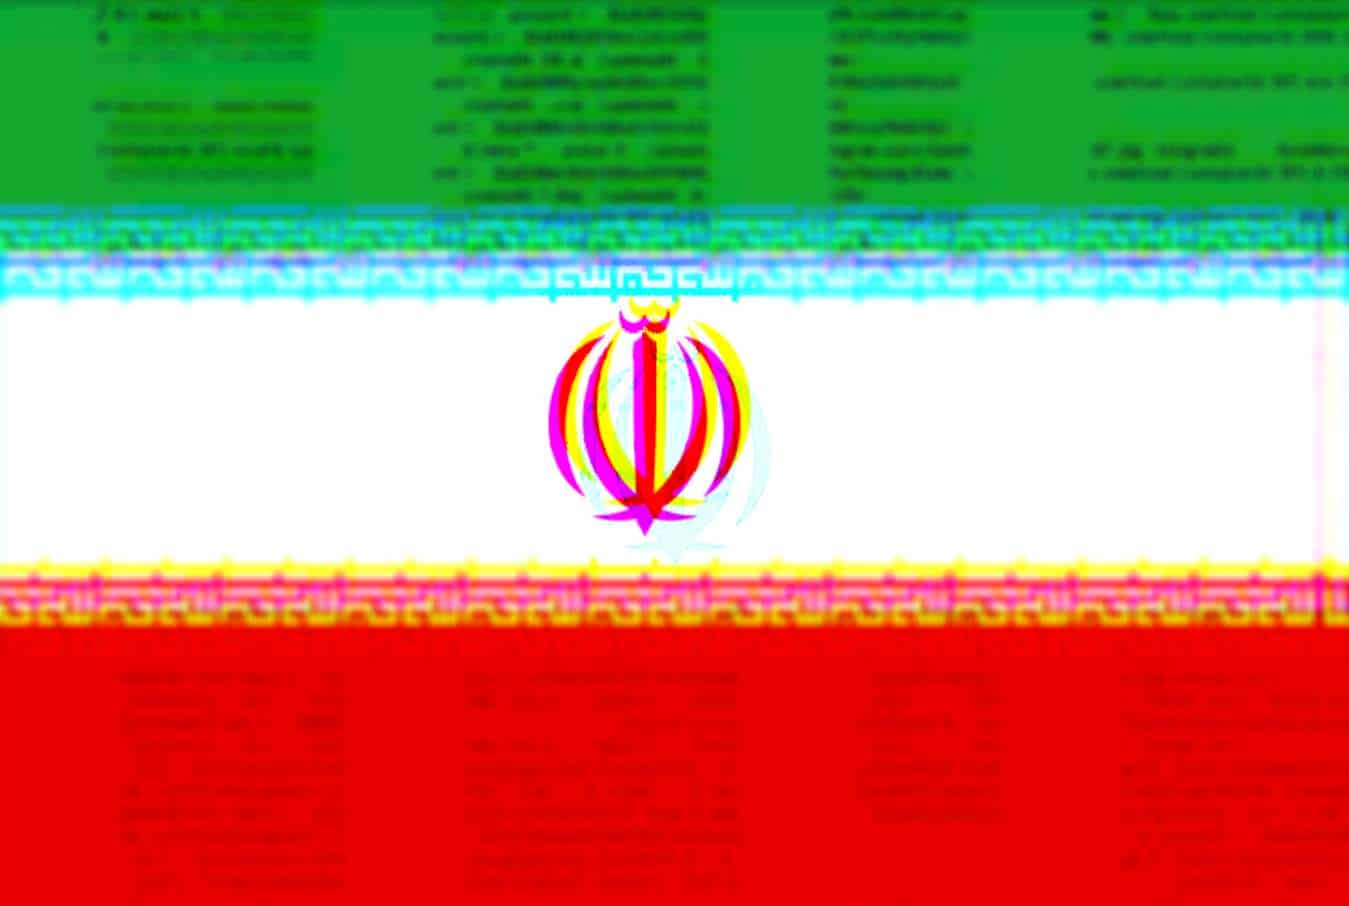 Hacker dumps 150 million user records from Iranian Raychat app